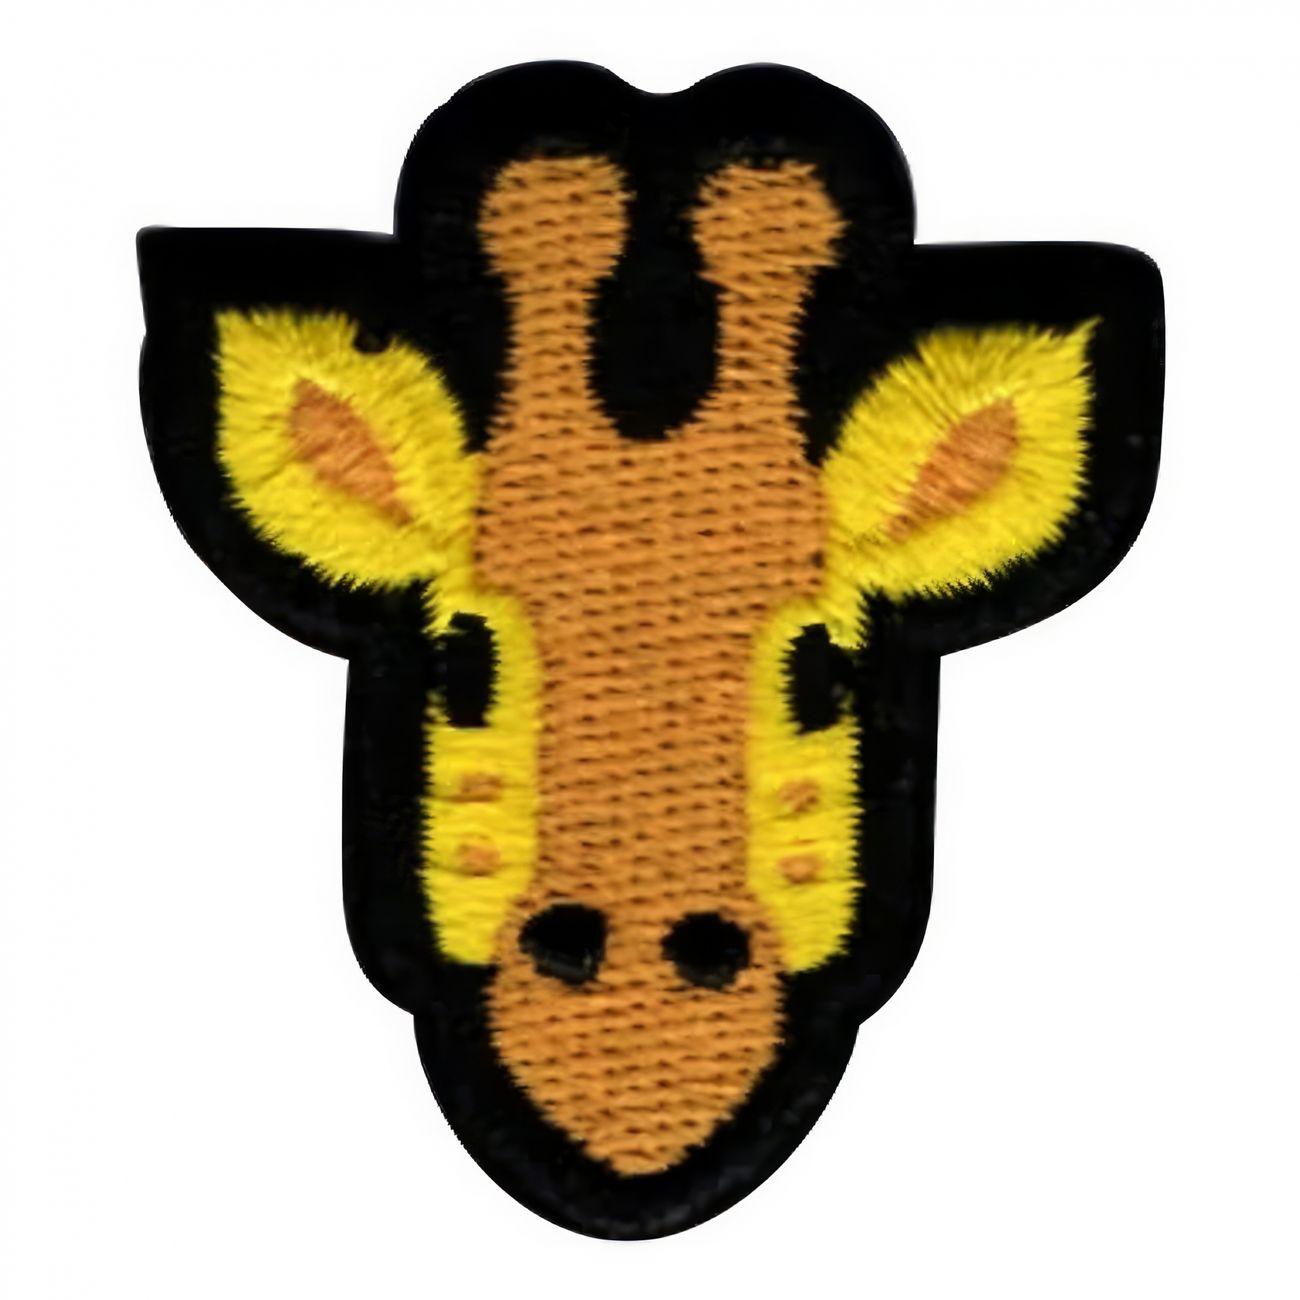 tygmarke-emoji-giraff-s-94116-1